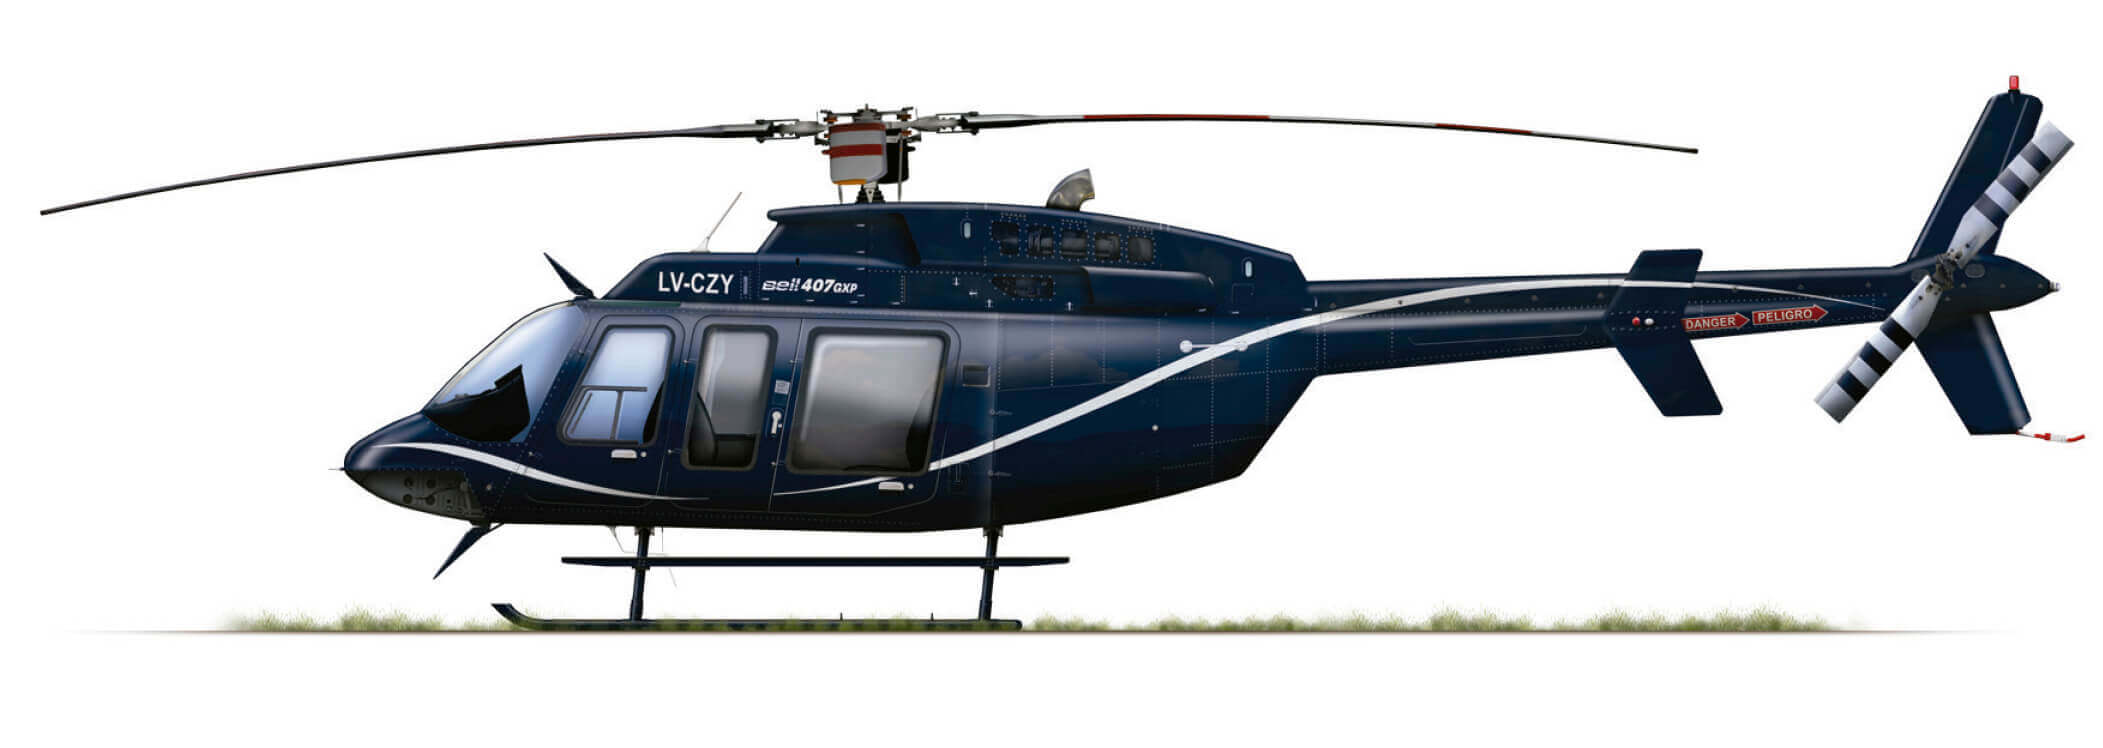 Bell 407 GXP